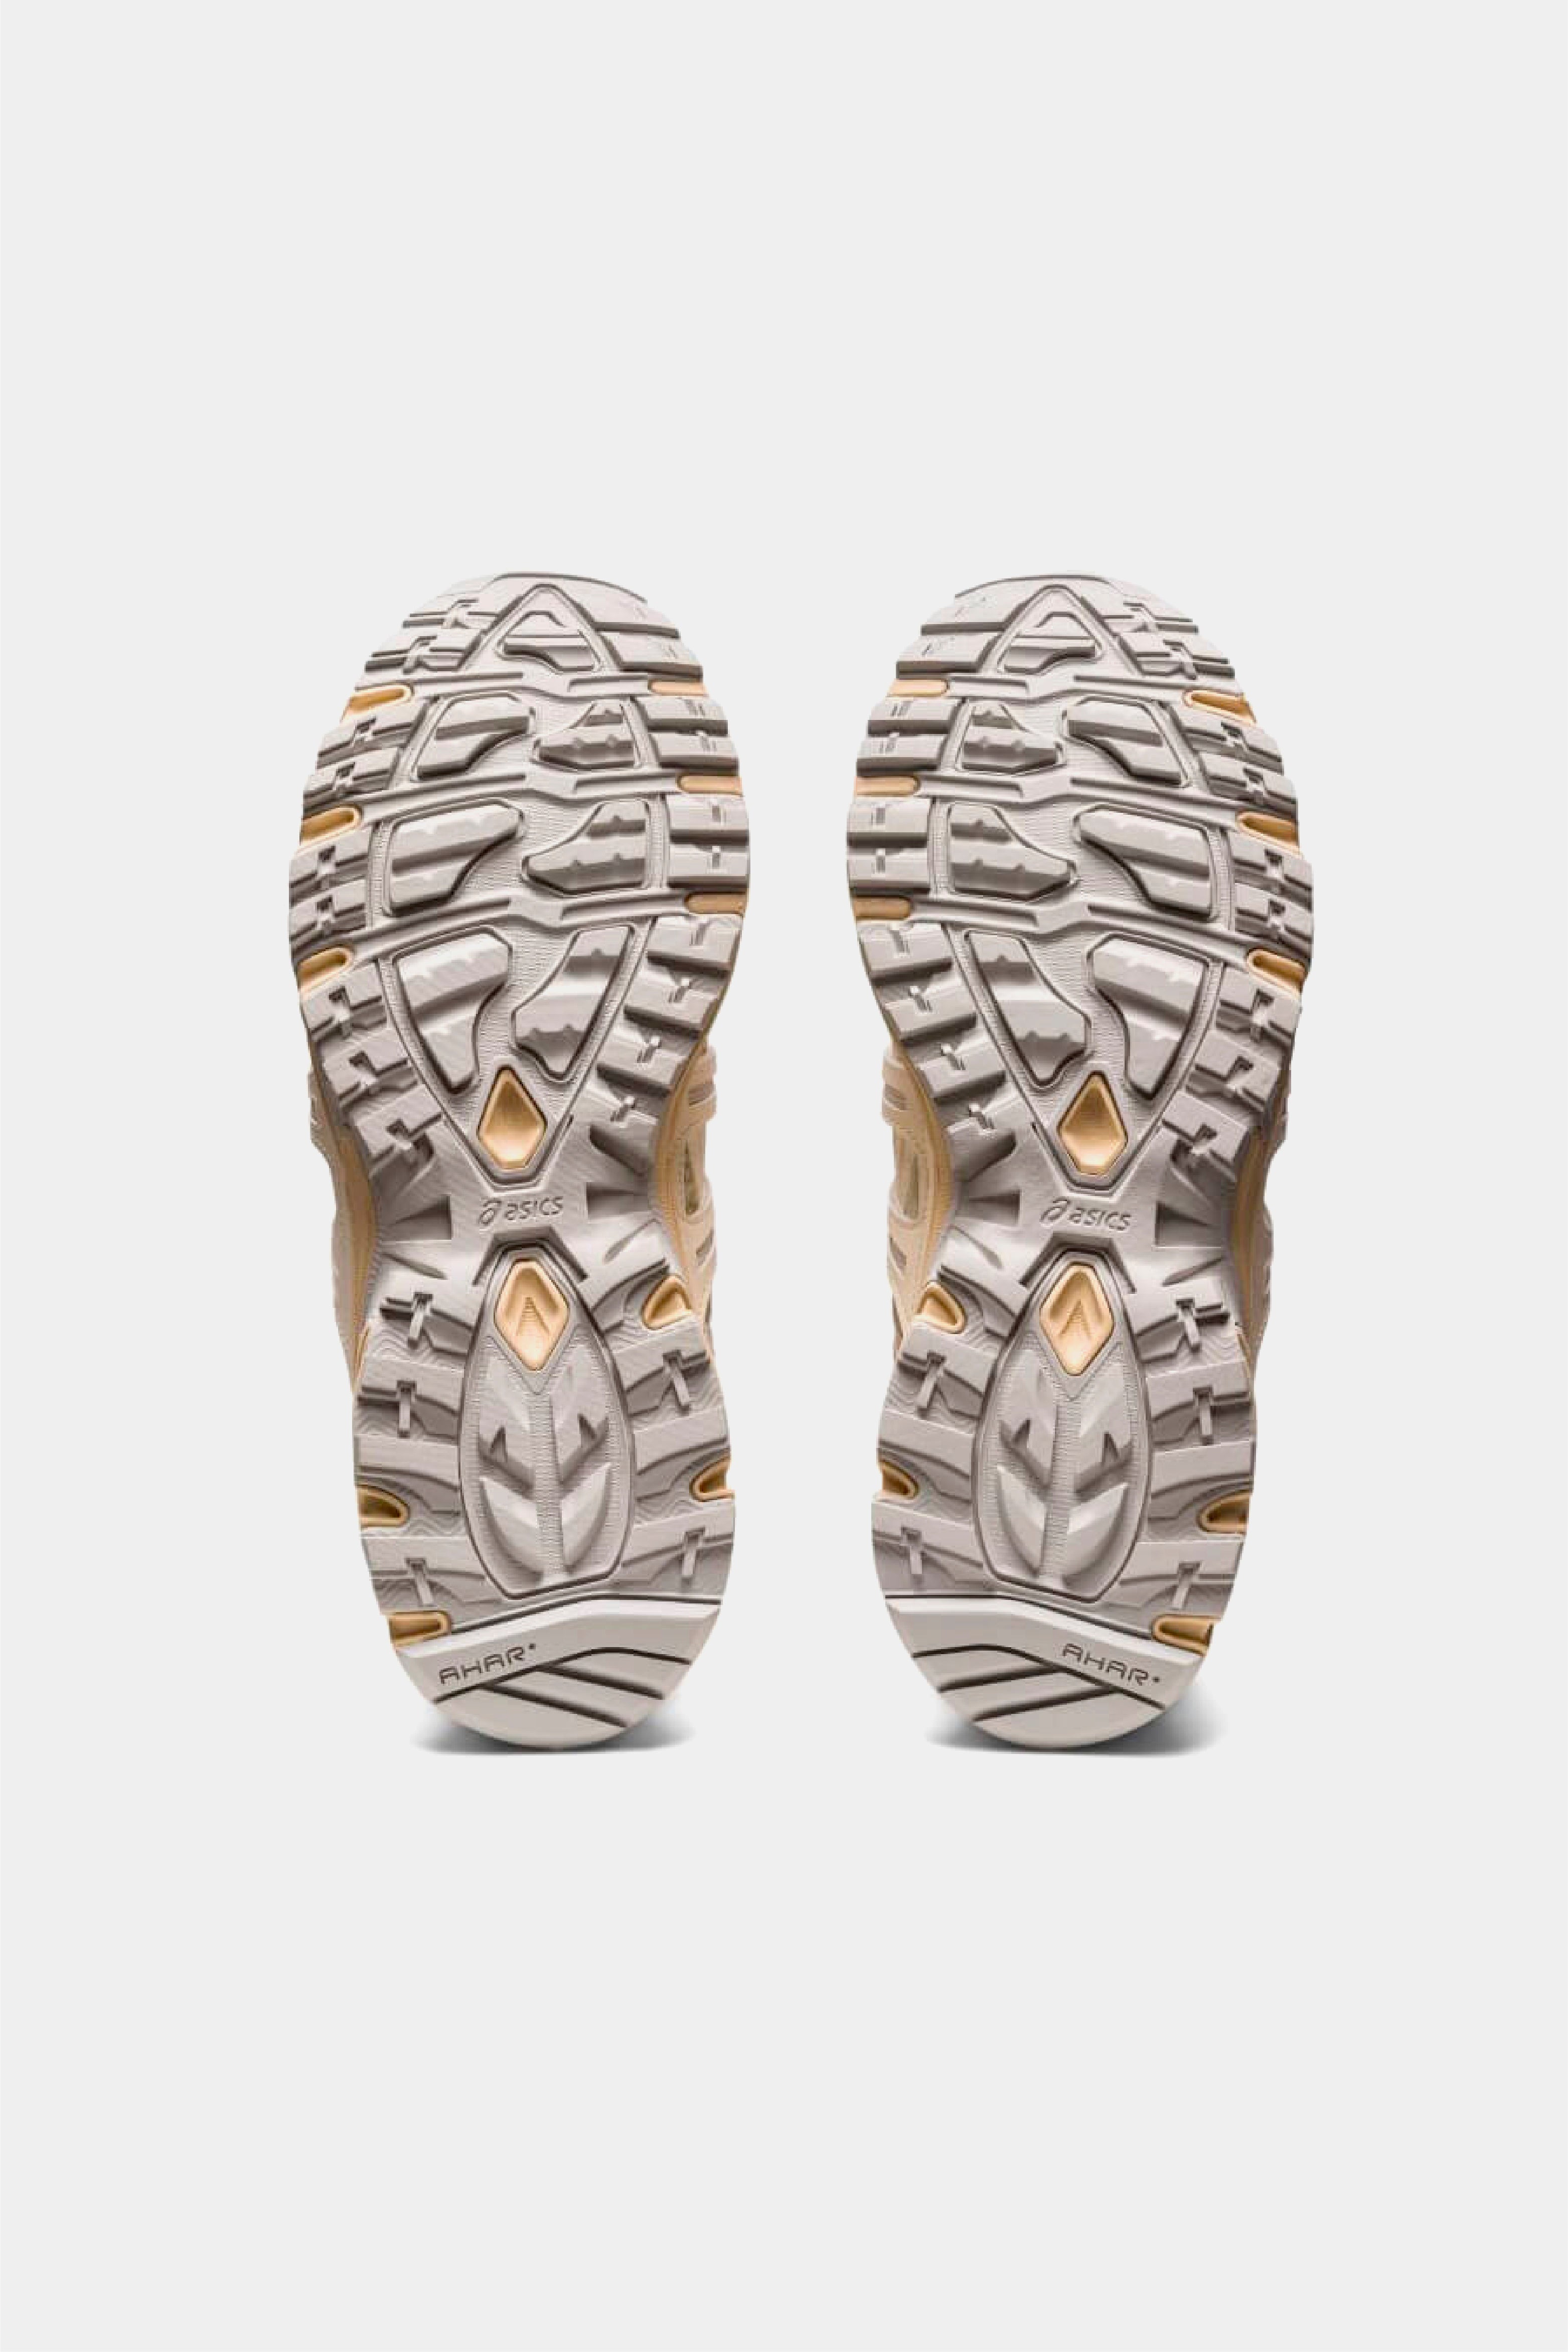 Selectshop FRAME - ASICS Gel-Sonoma 15-50 "Cream Oatmeal" Footwear Concept Store Dubai